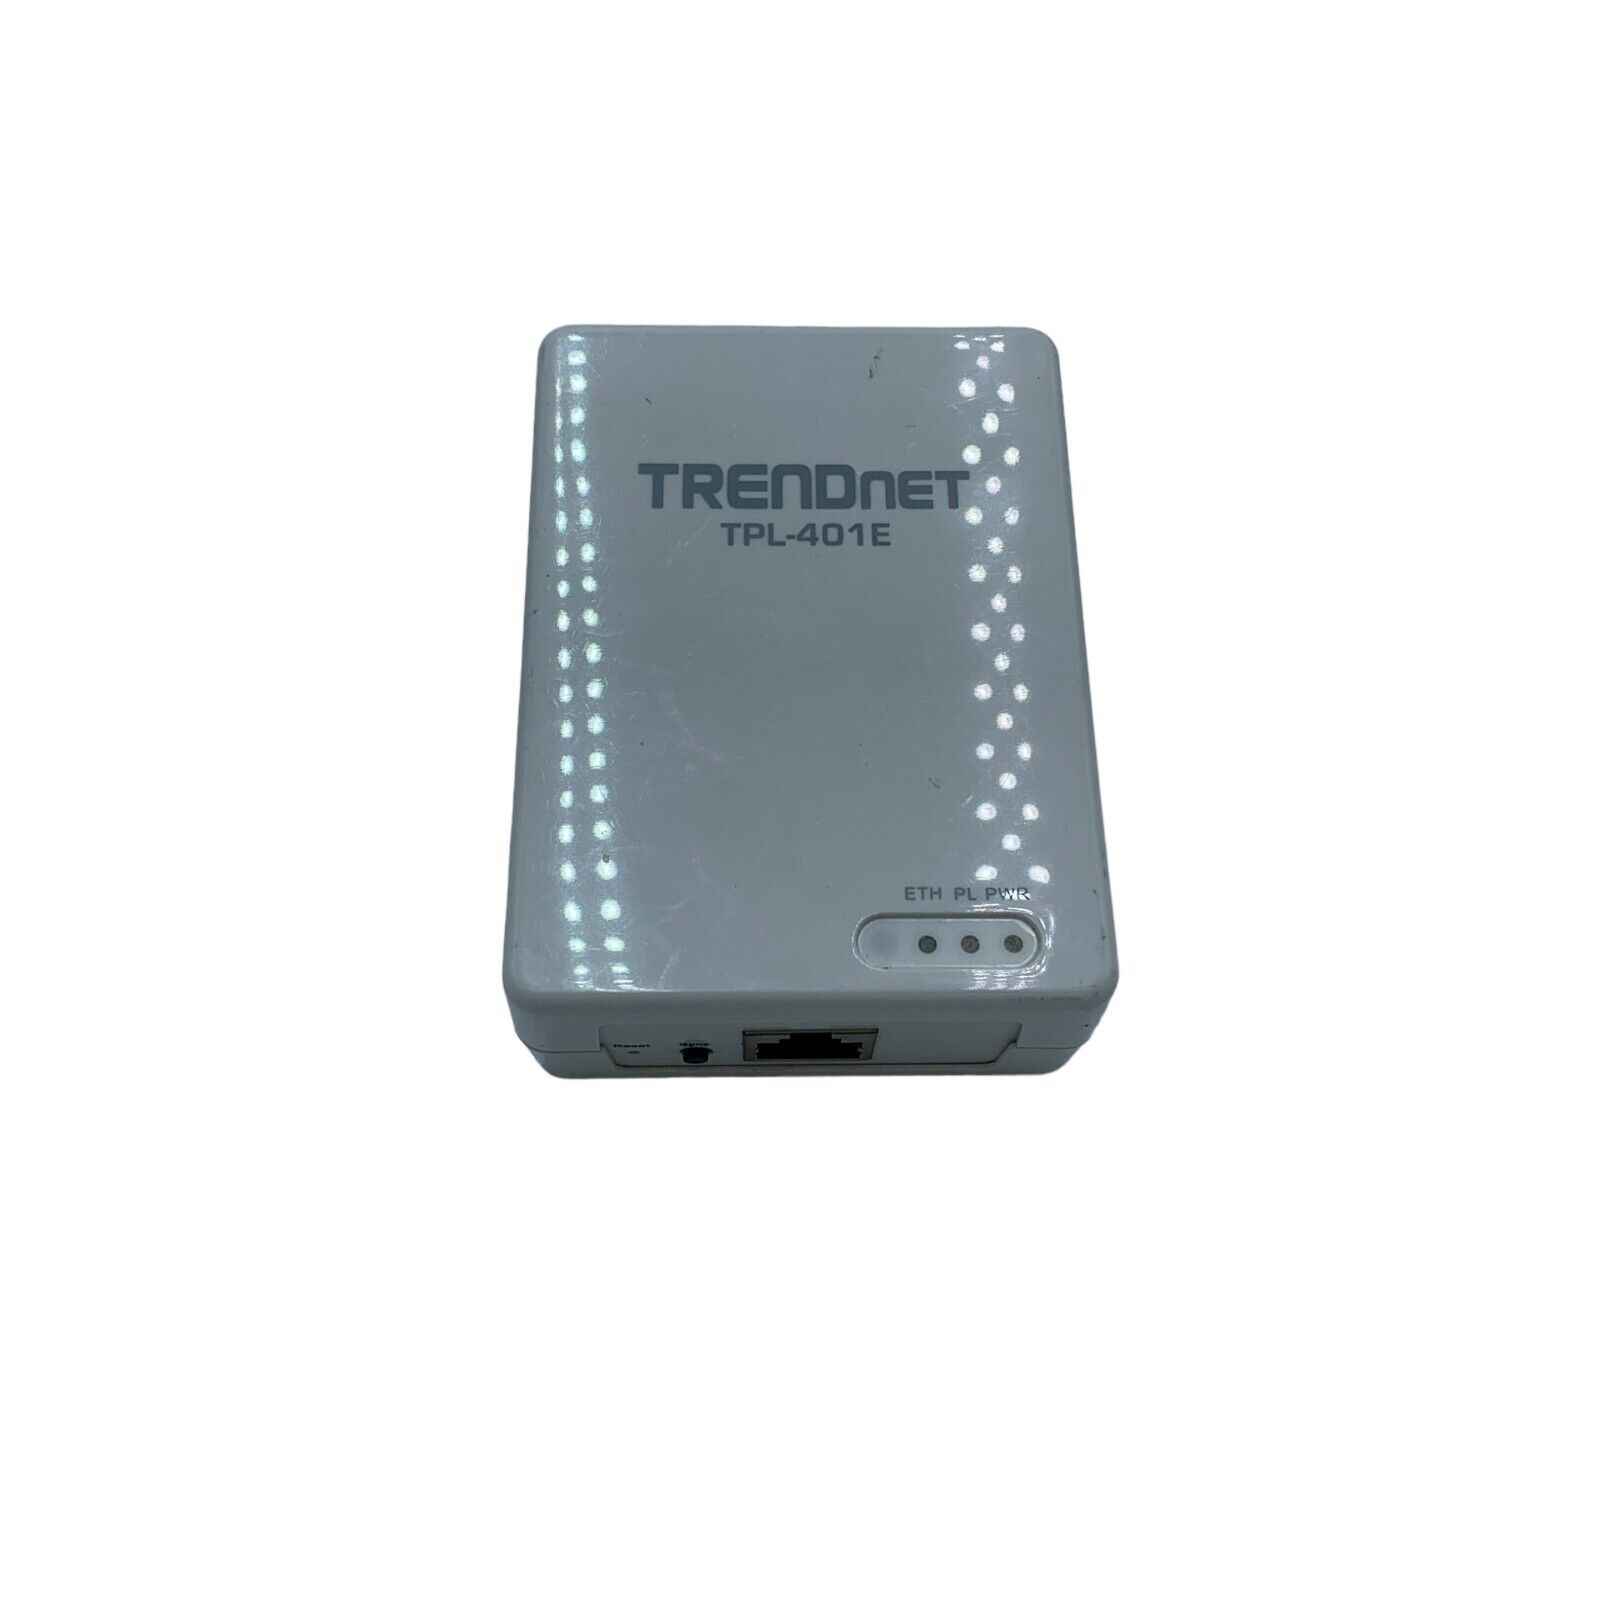 TRENDnet TPL-401E Power Line Ethernet 500 Mbps Adapters 1 Units